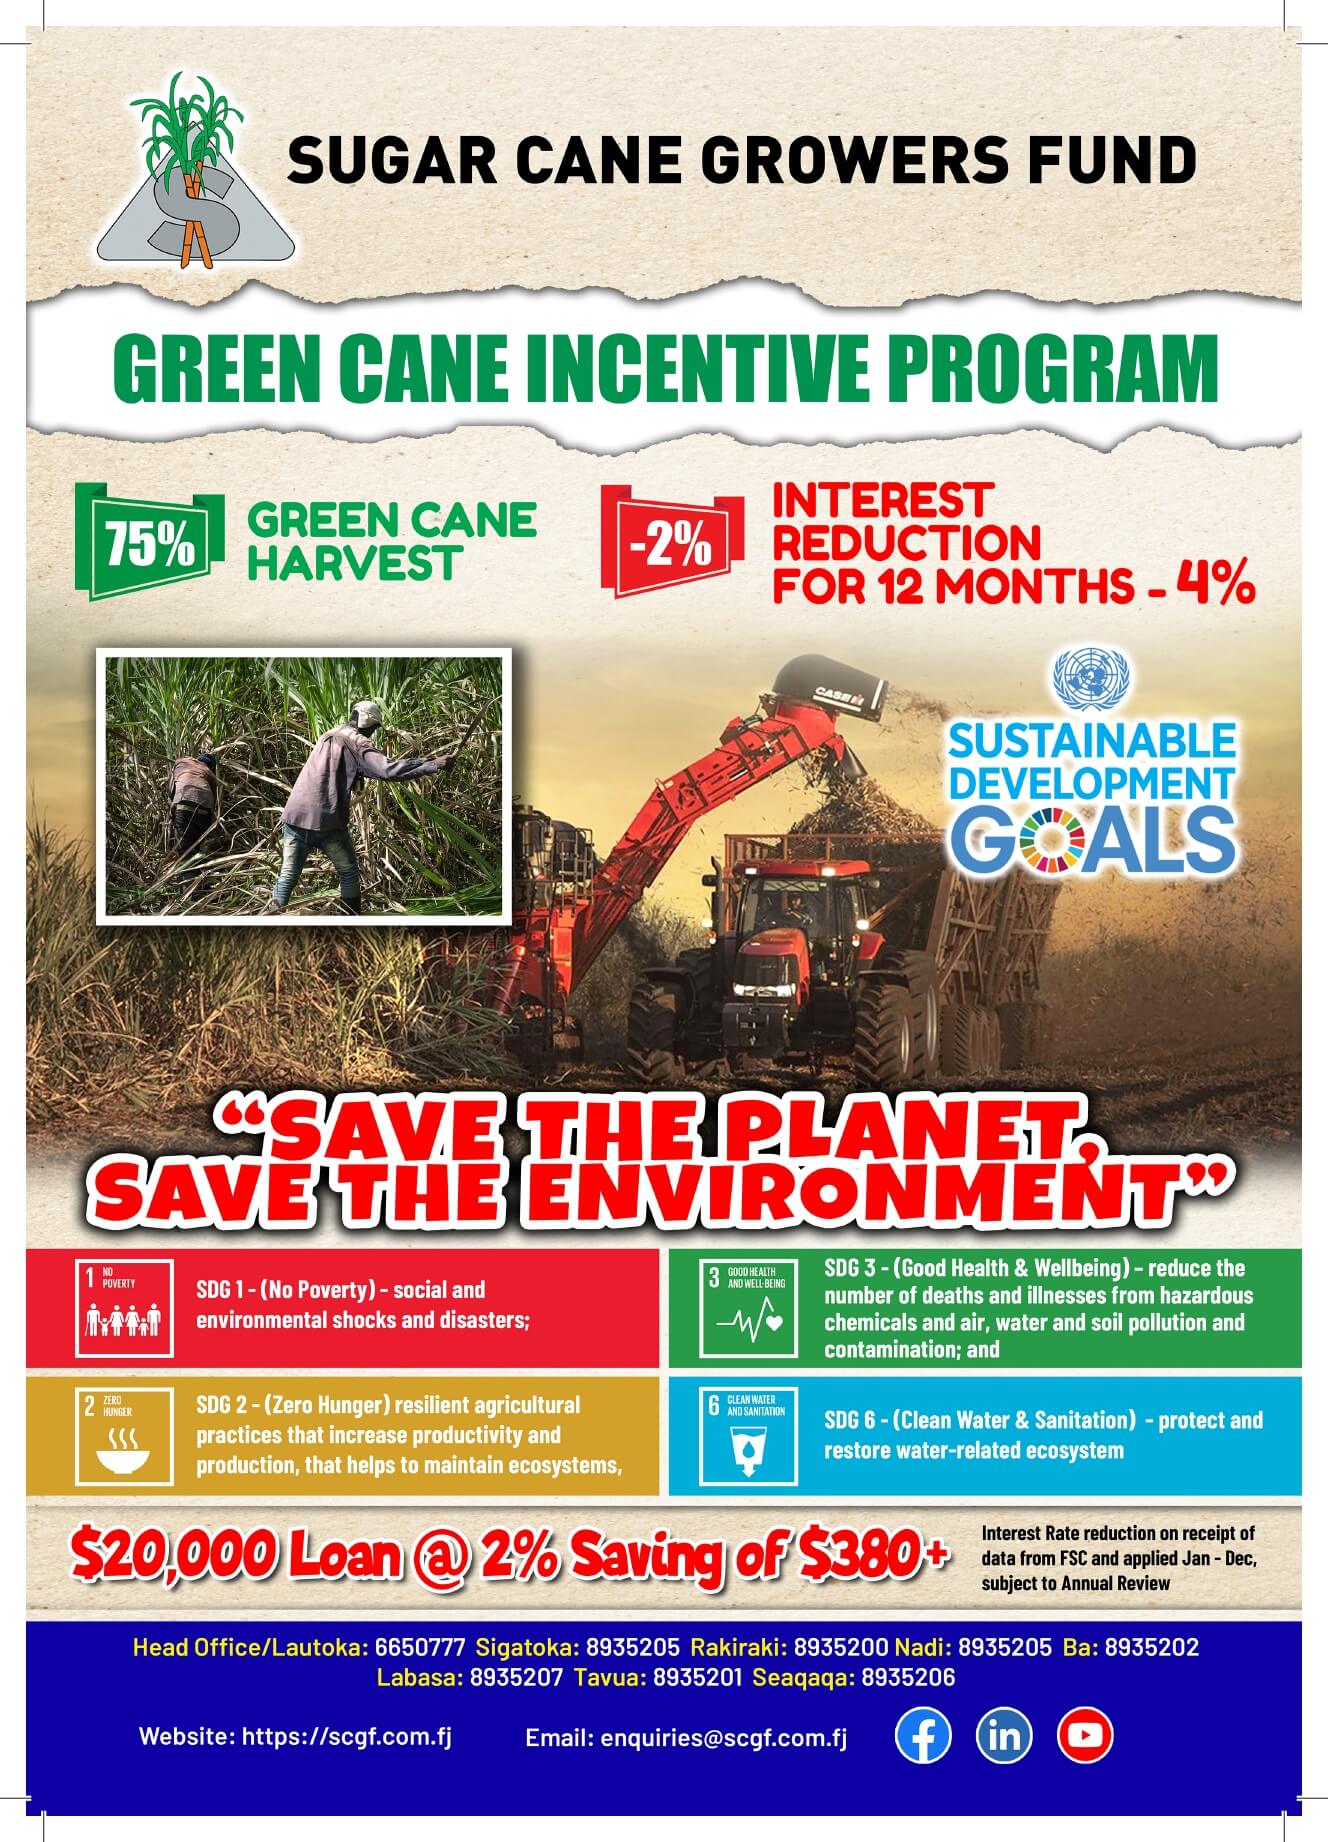 Green Cane Incentive Program